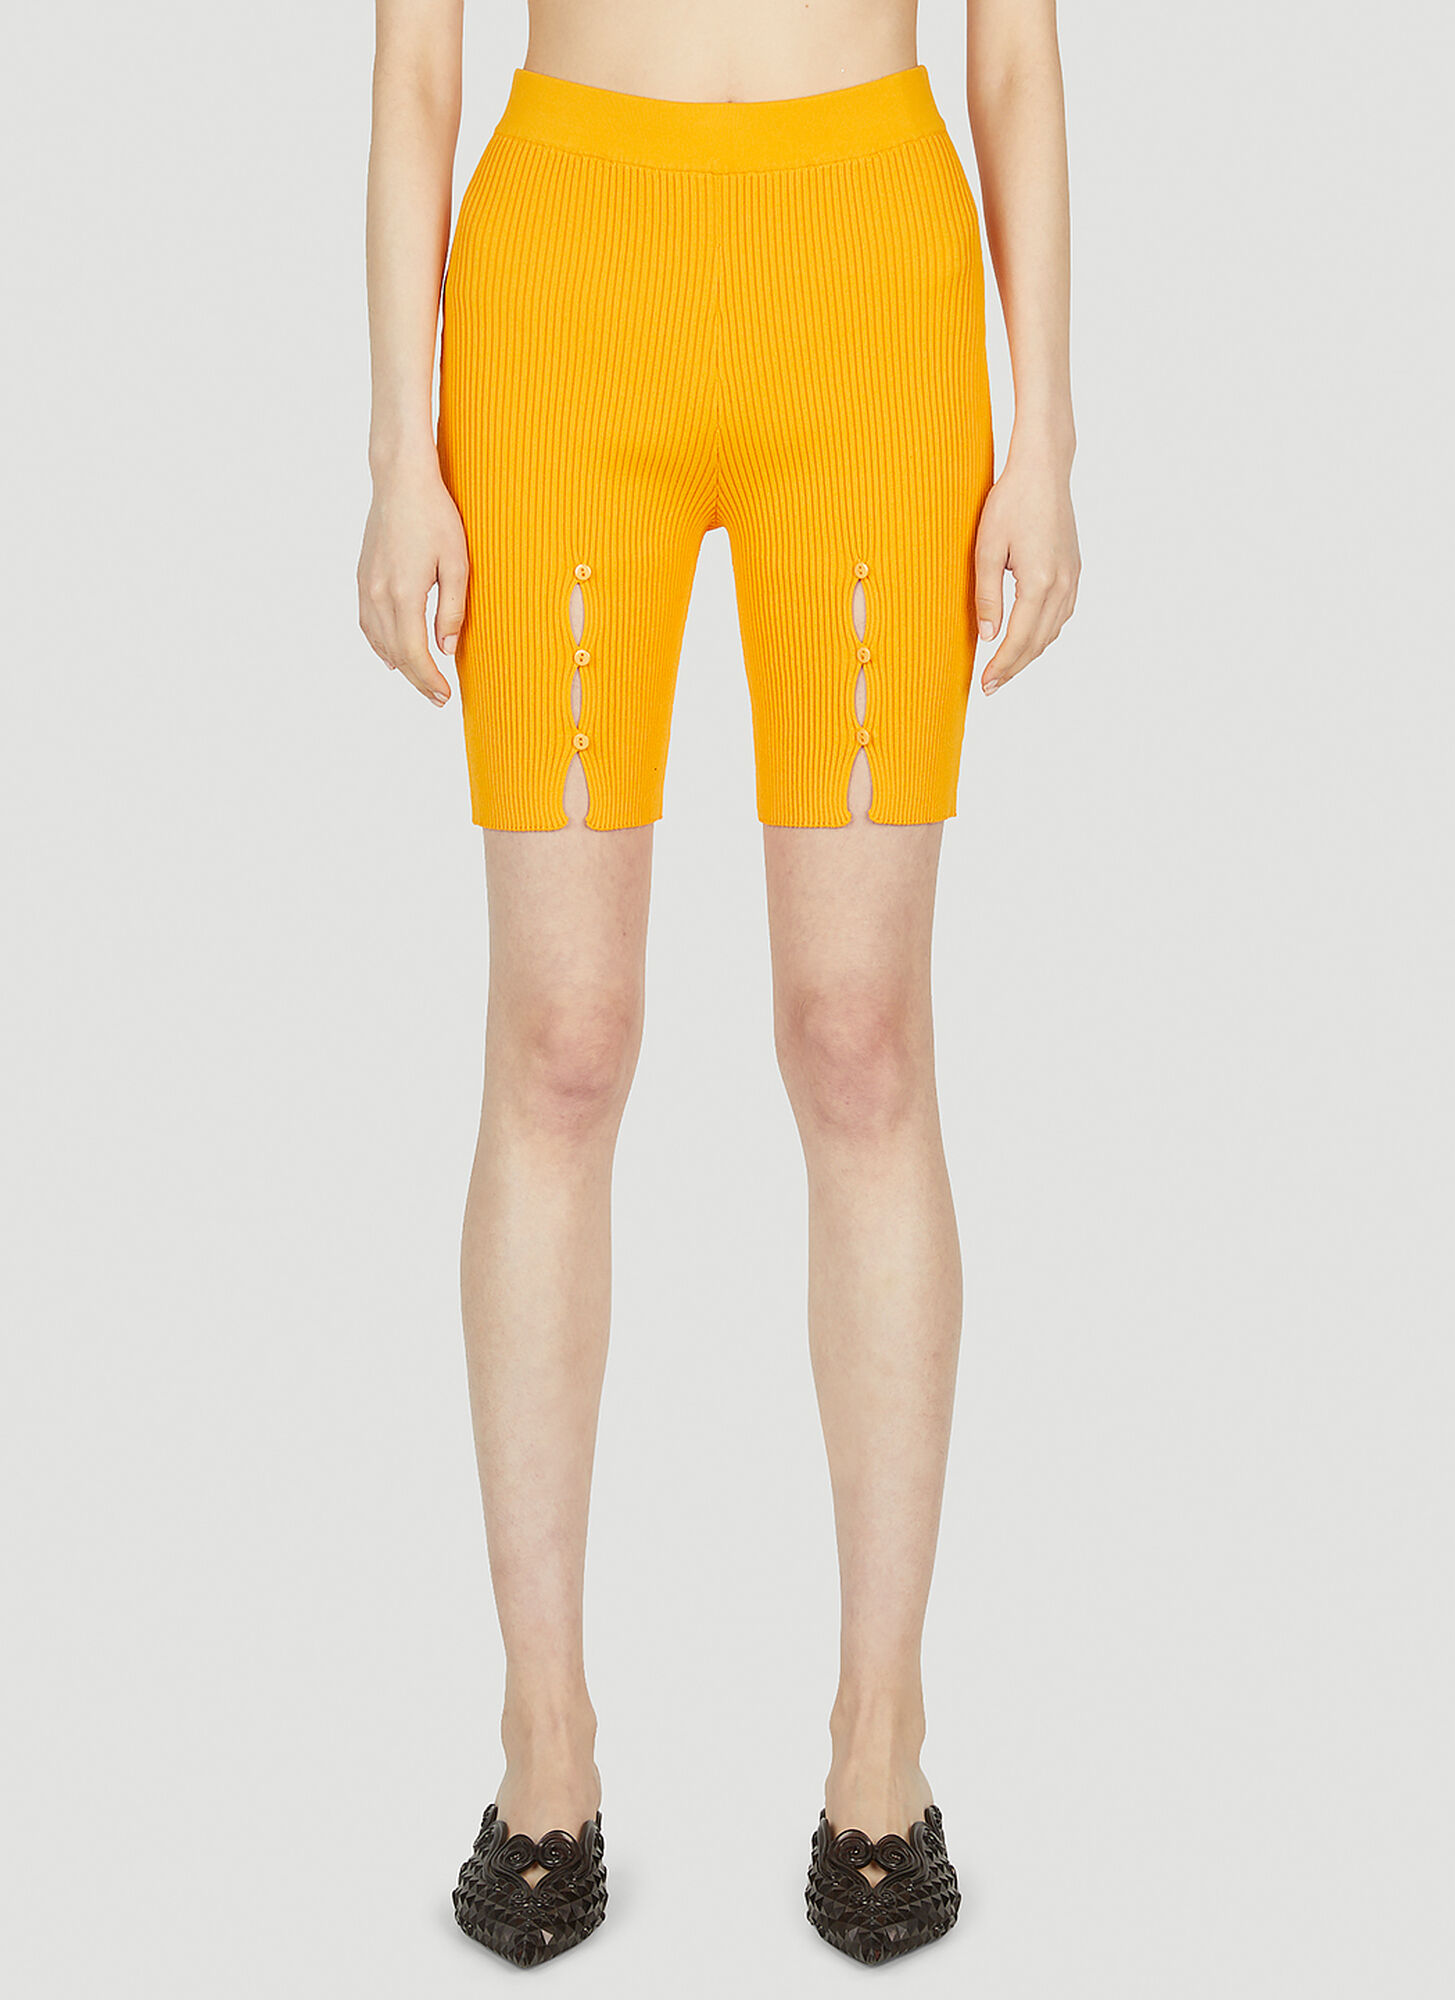 Ester Manas Knit Biker Shorts Female Orange